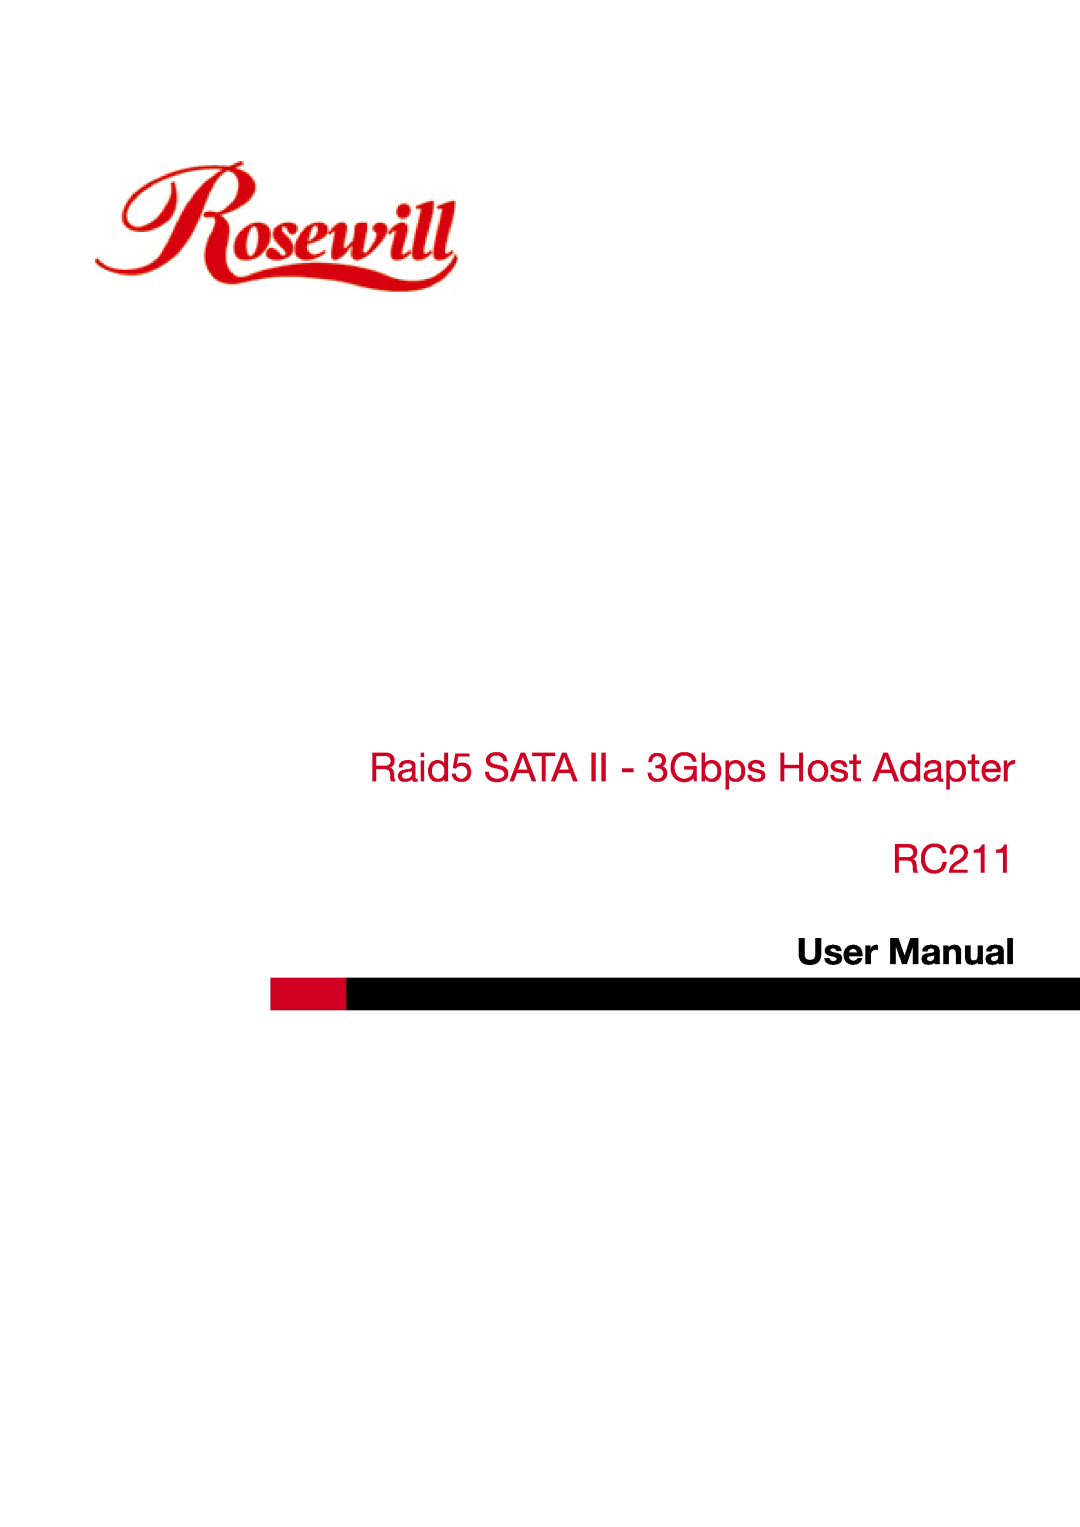 Rosewill user manual Raid5 SATA II - 3Gbps Host Adapter RC211, User Manual 